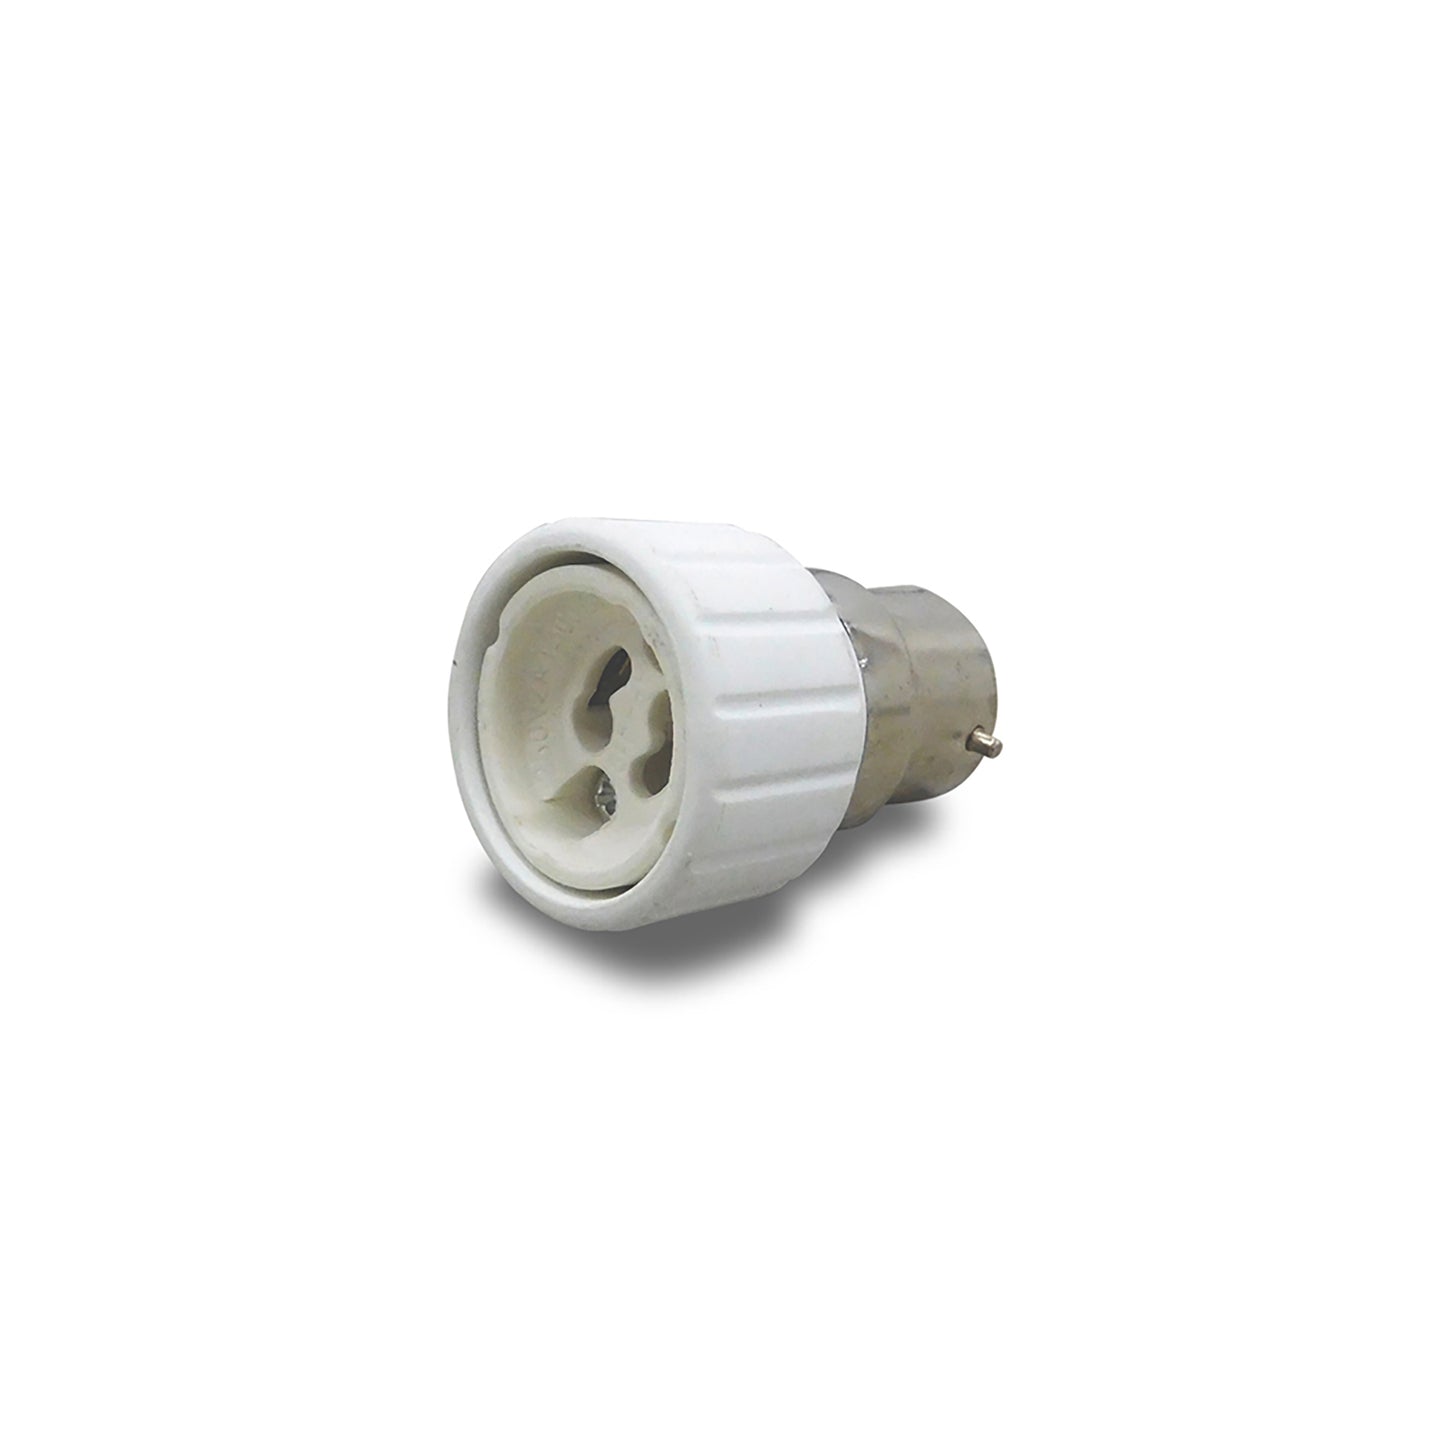 B22 Lampholder to GU10 Lamp Socket Converter